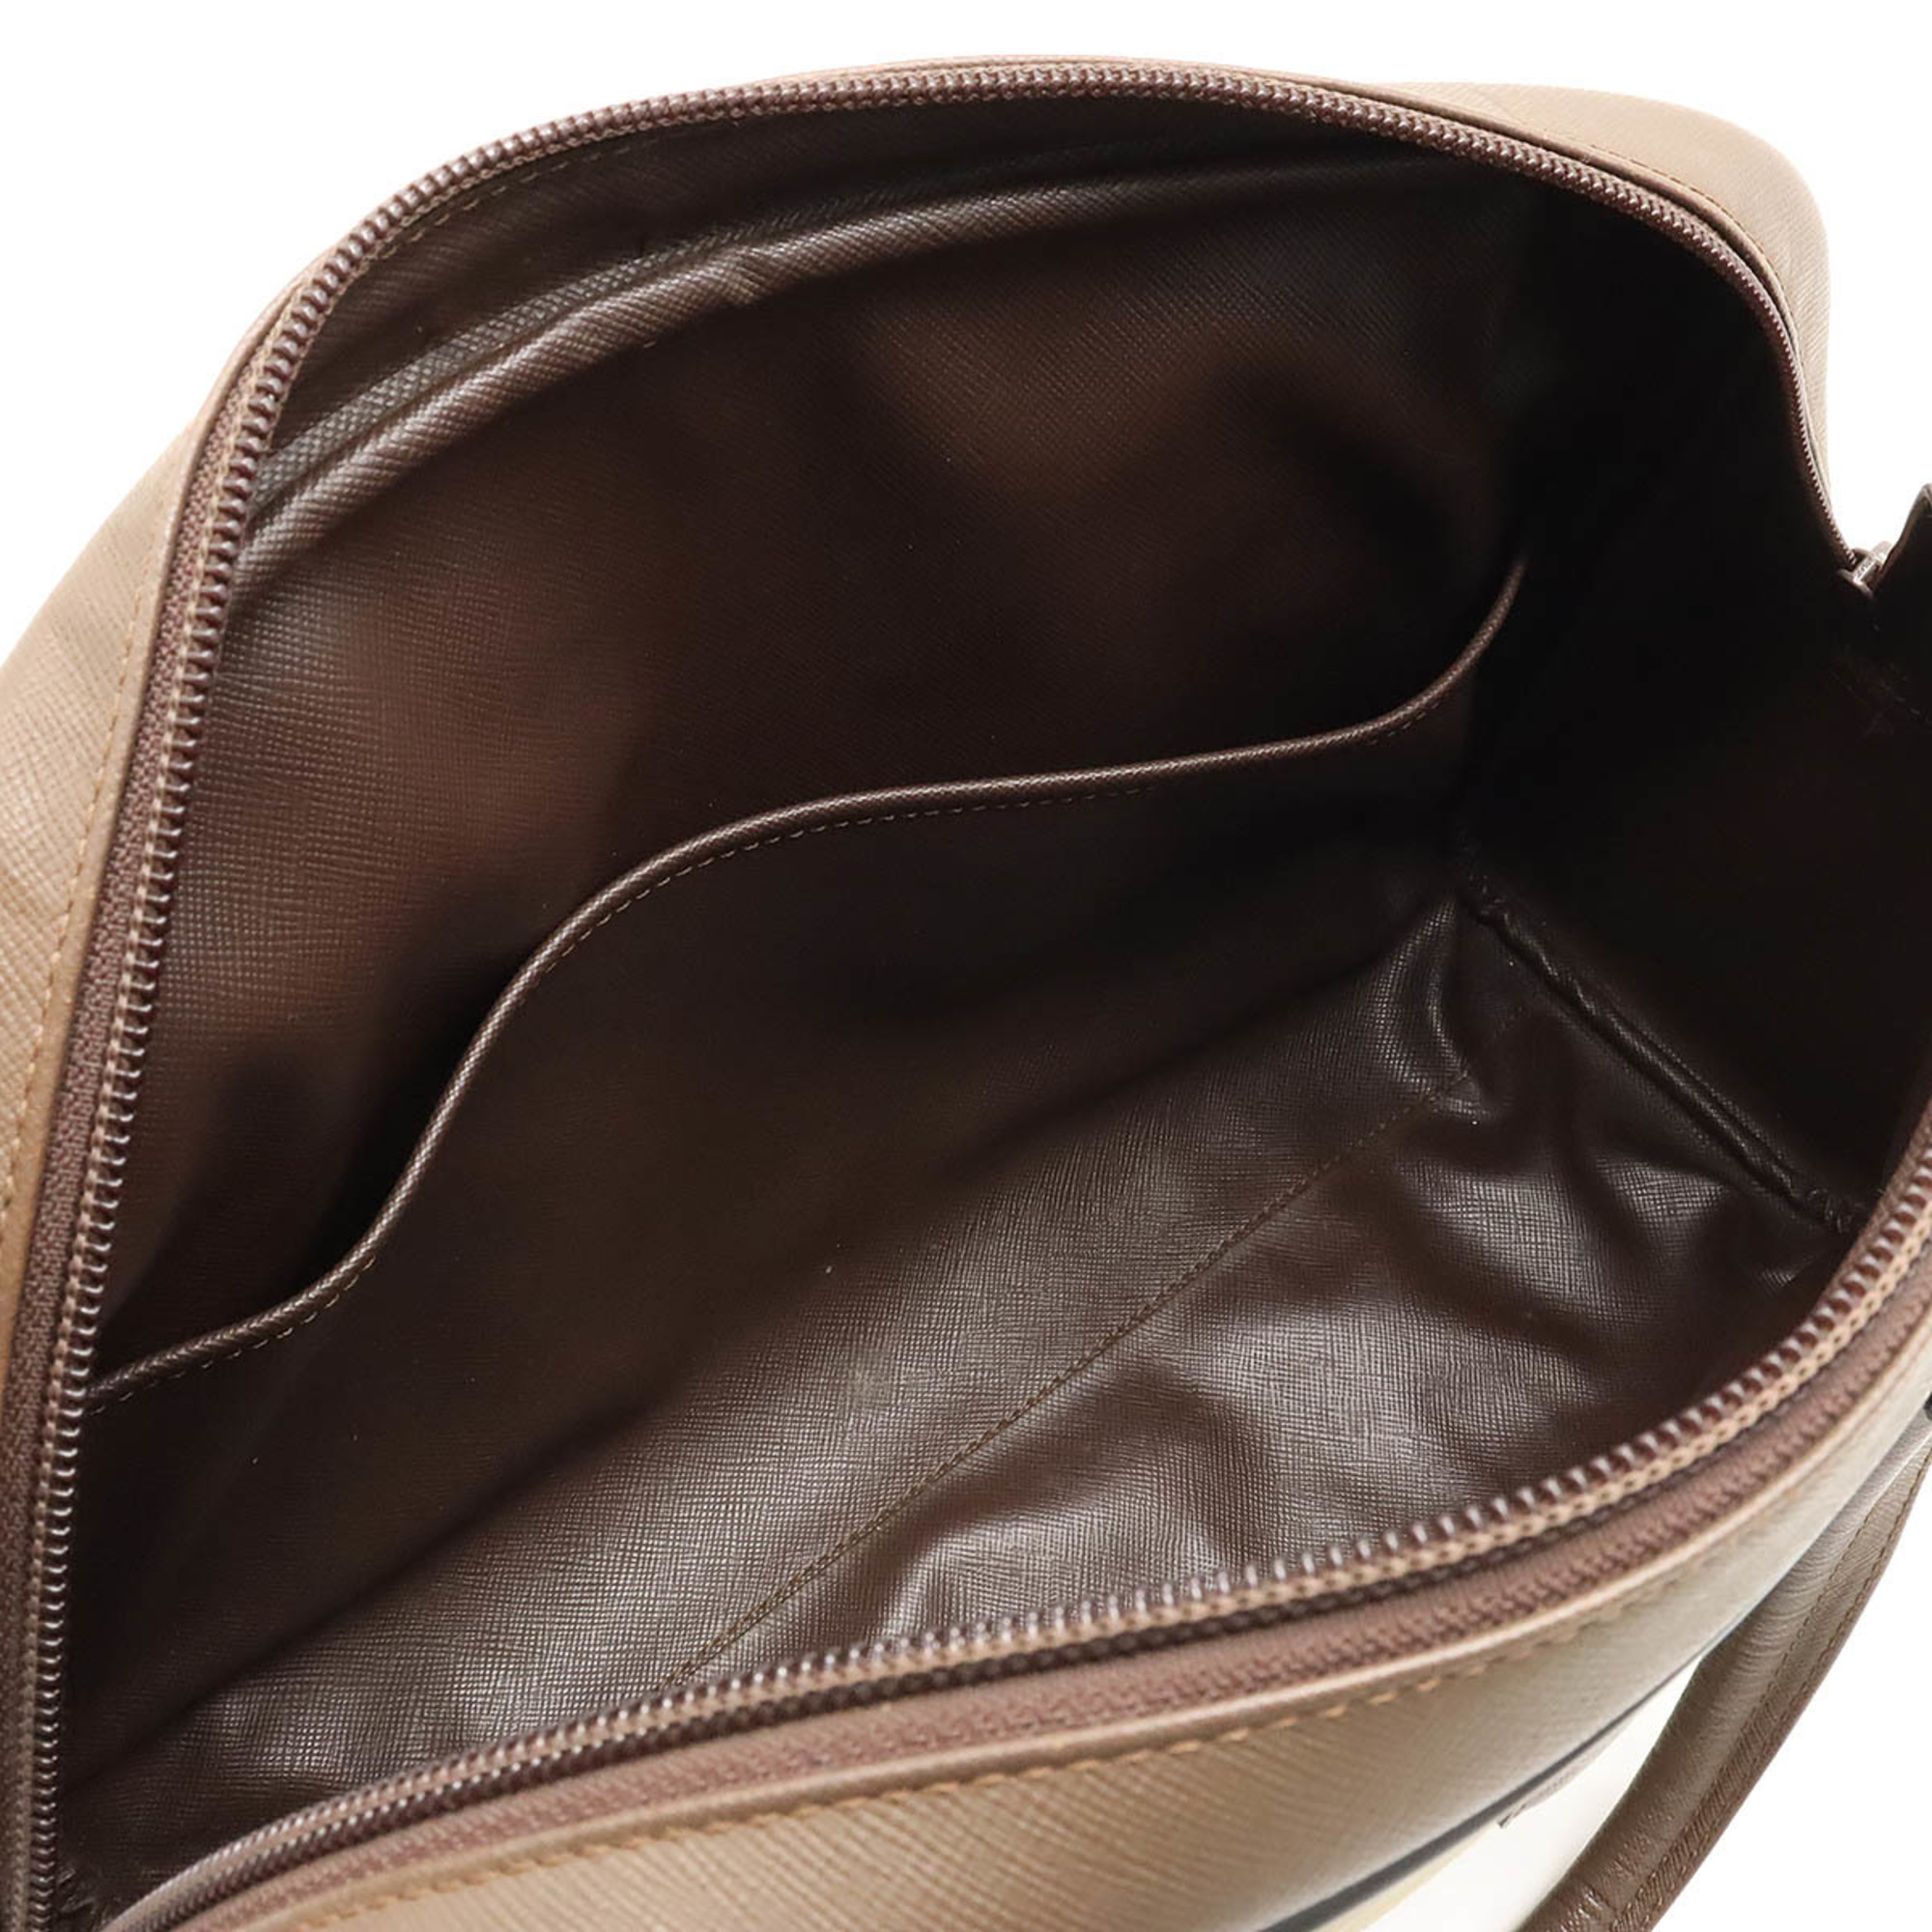 BURBERRY Checked Boston Handbag Canvas Leather Khaki Dark Brown